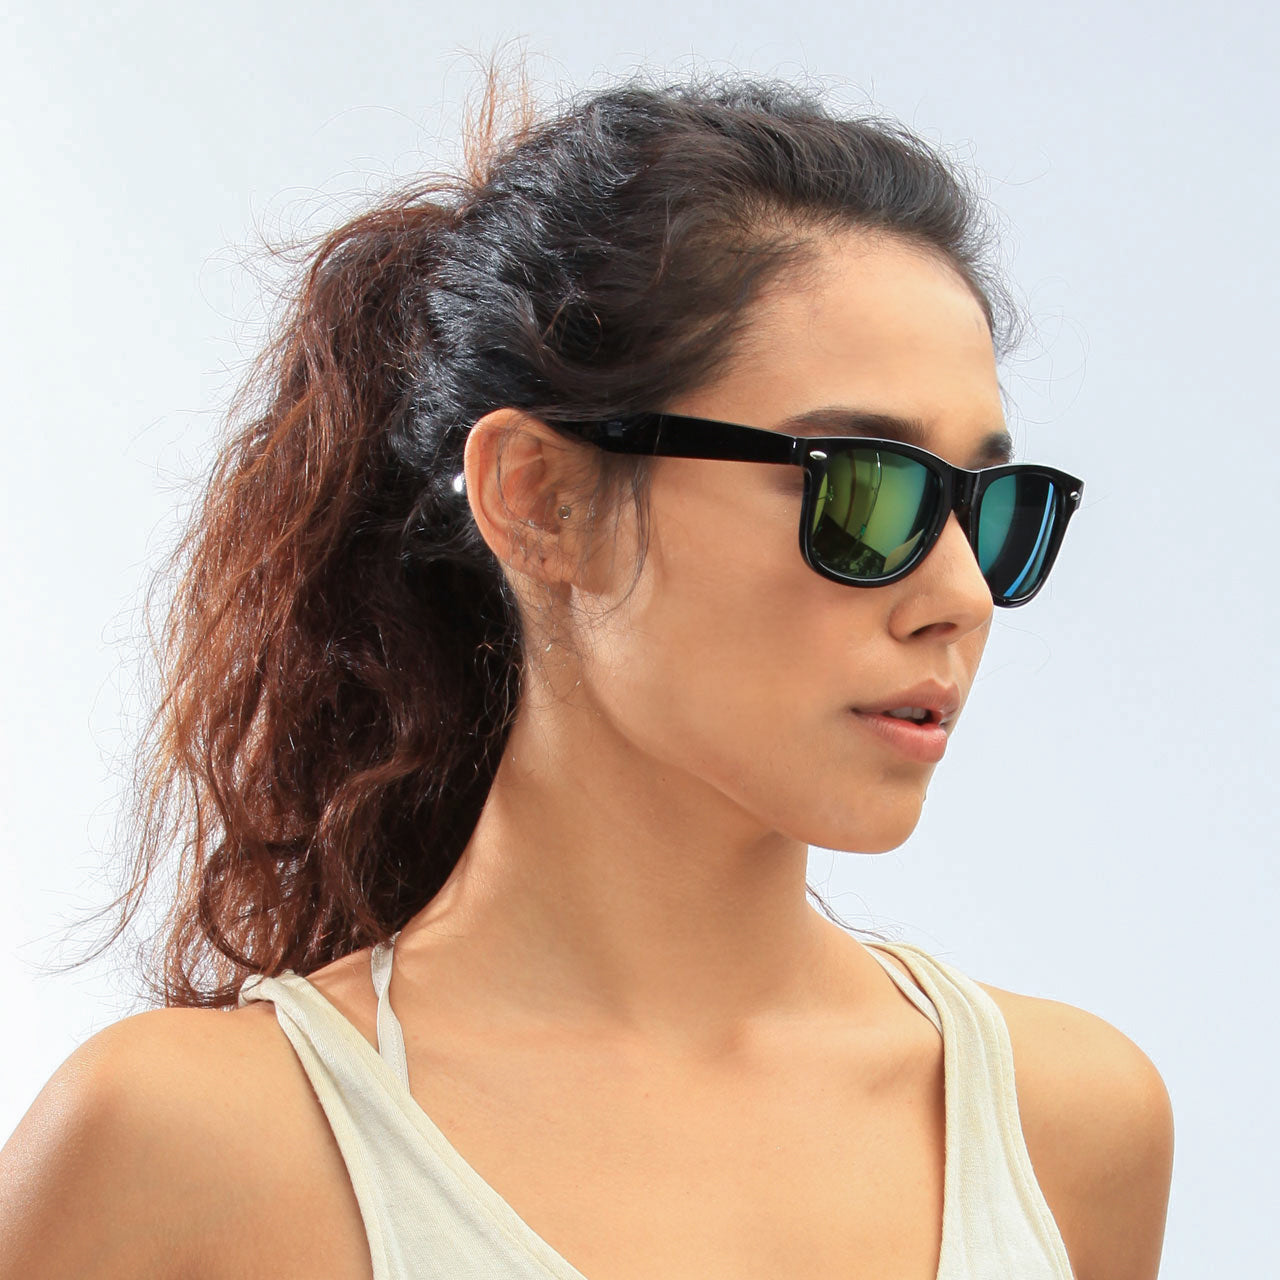 Assorted Colors Polycarbonate Polarized Classic Sunglasses Unisex Bulk   (Pack of Dozen)